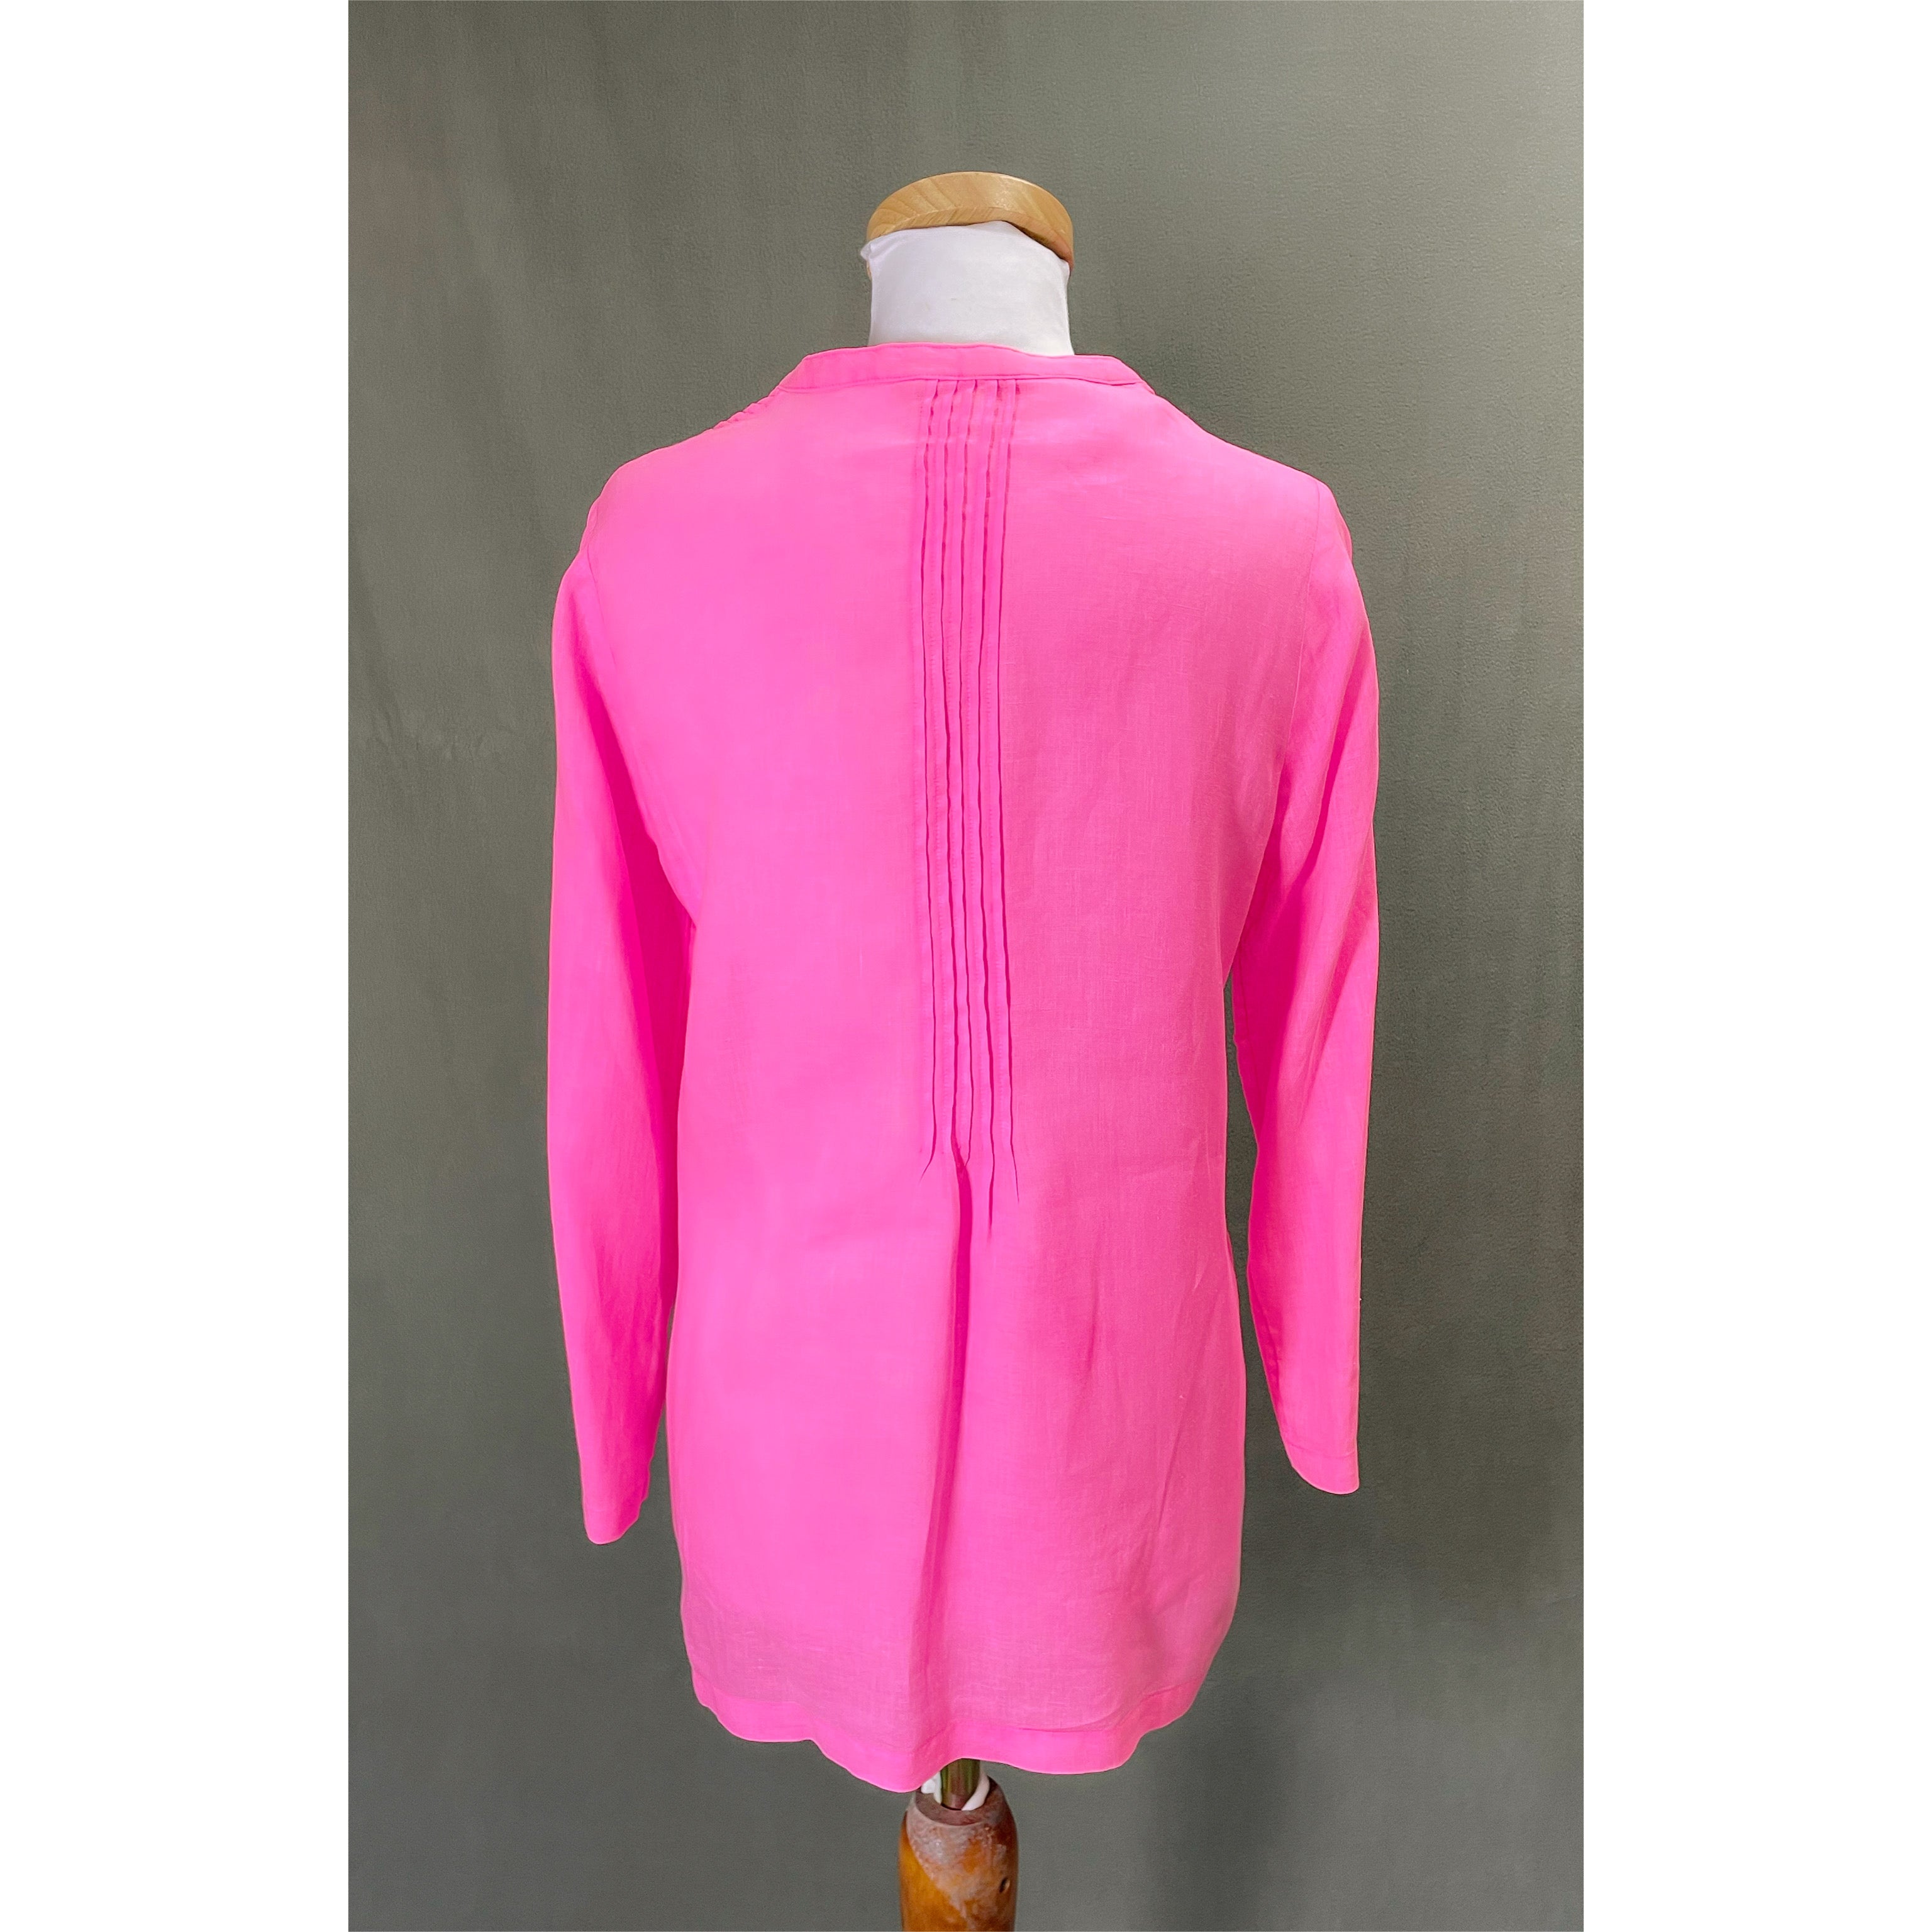 Lilly Pulitzer hot pink linen Sarasota blouse, size XS